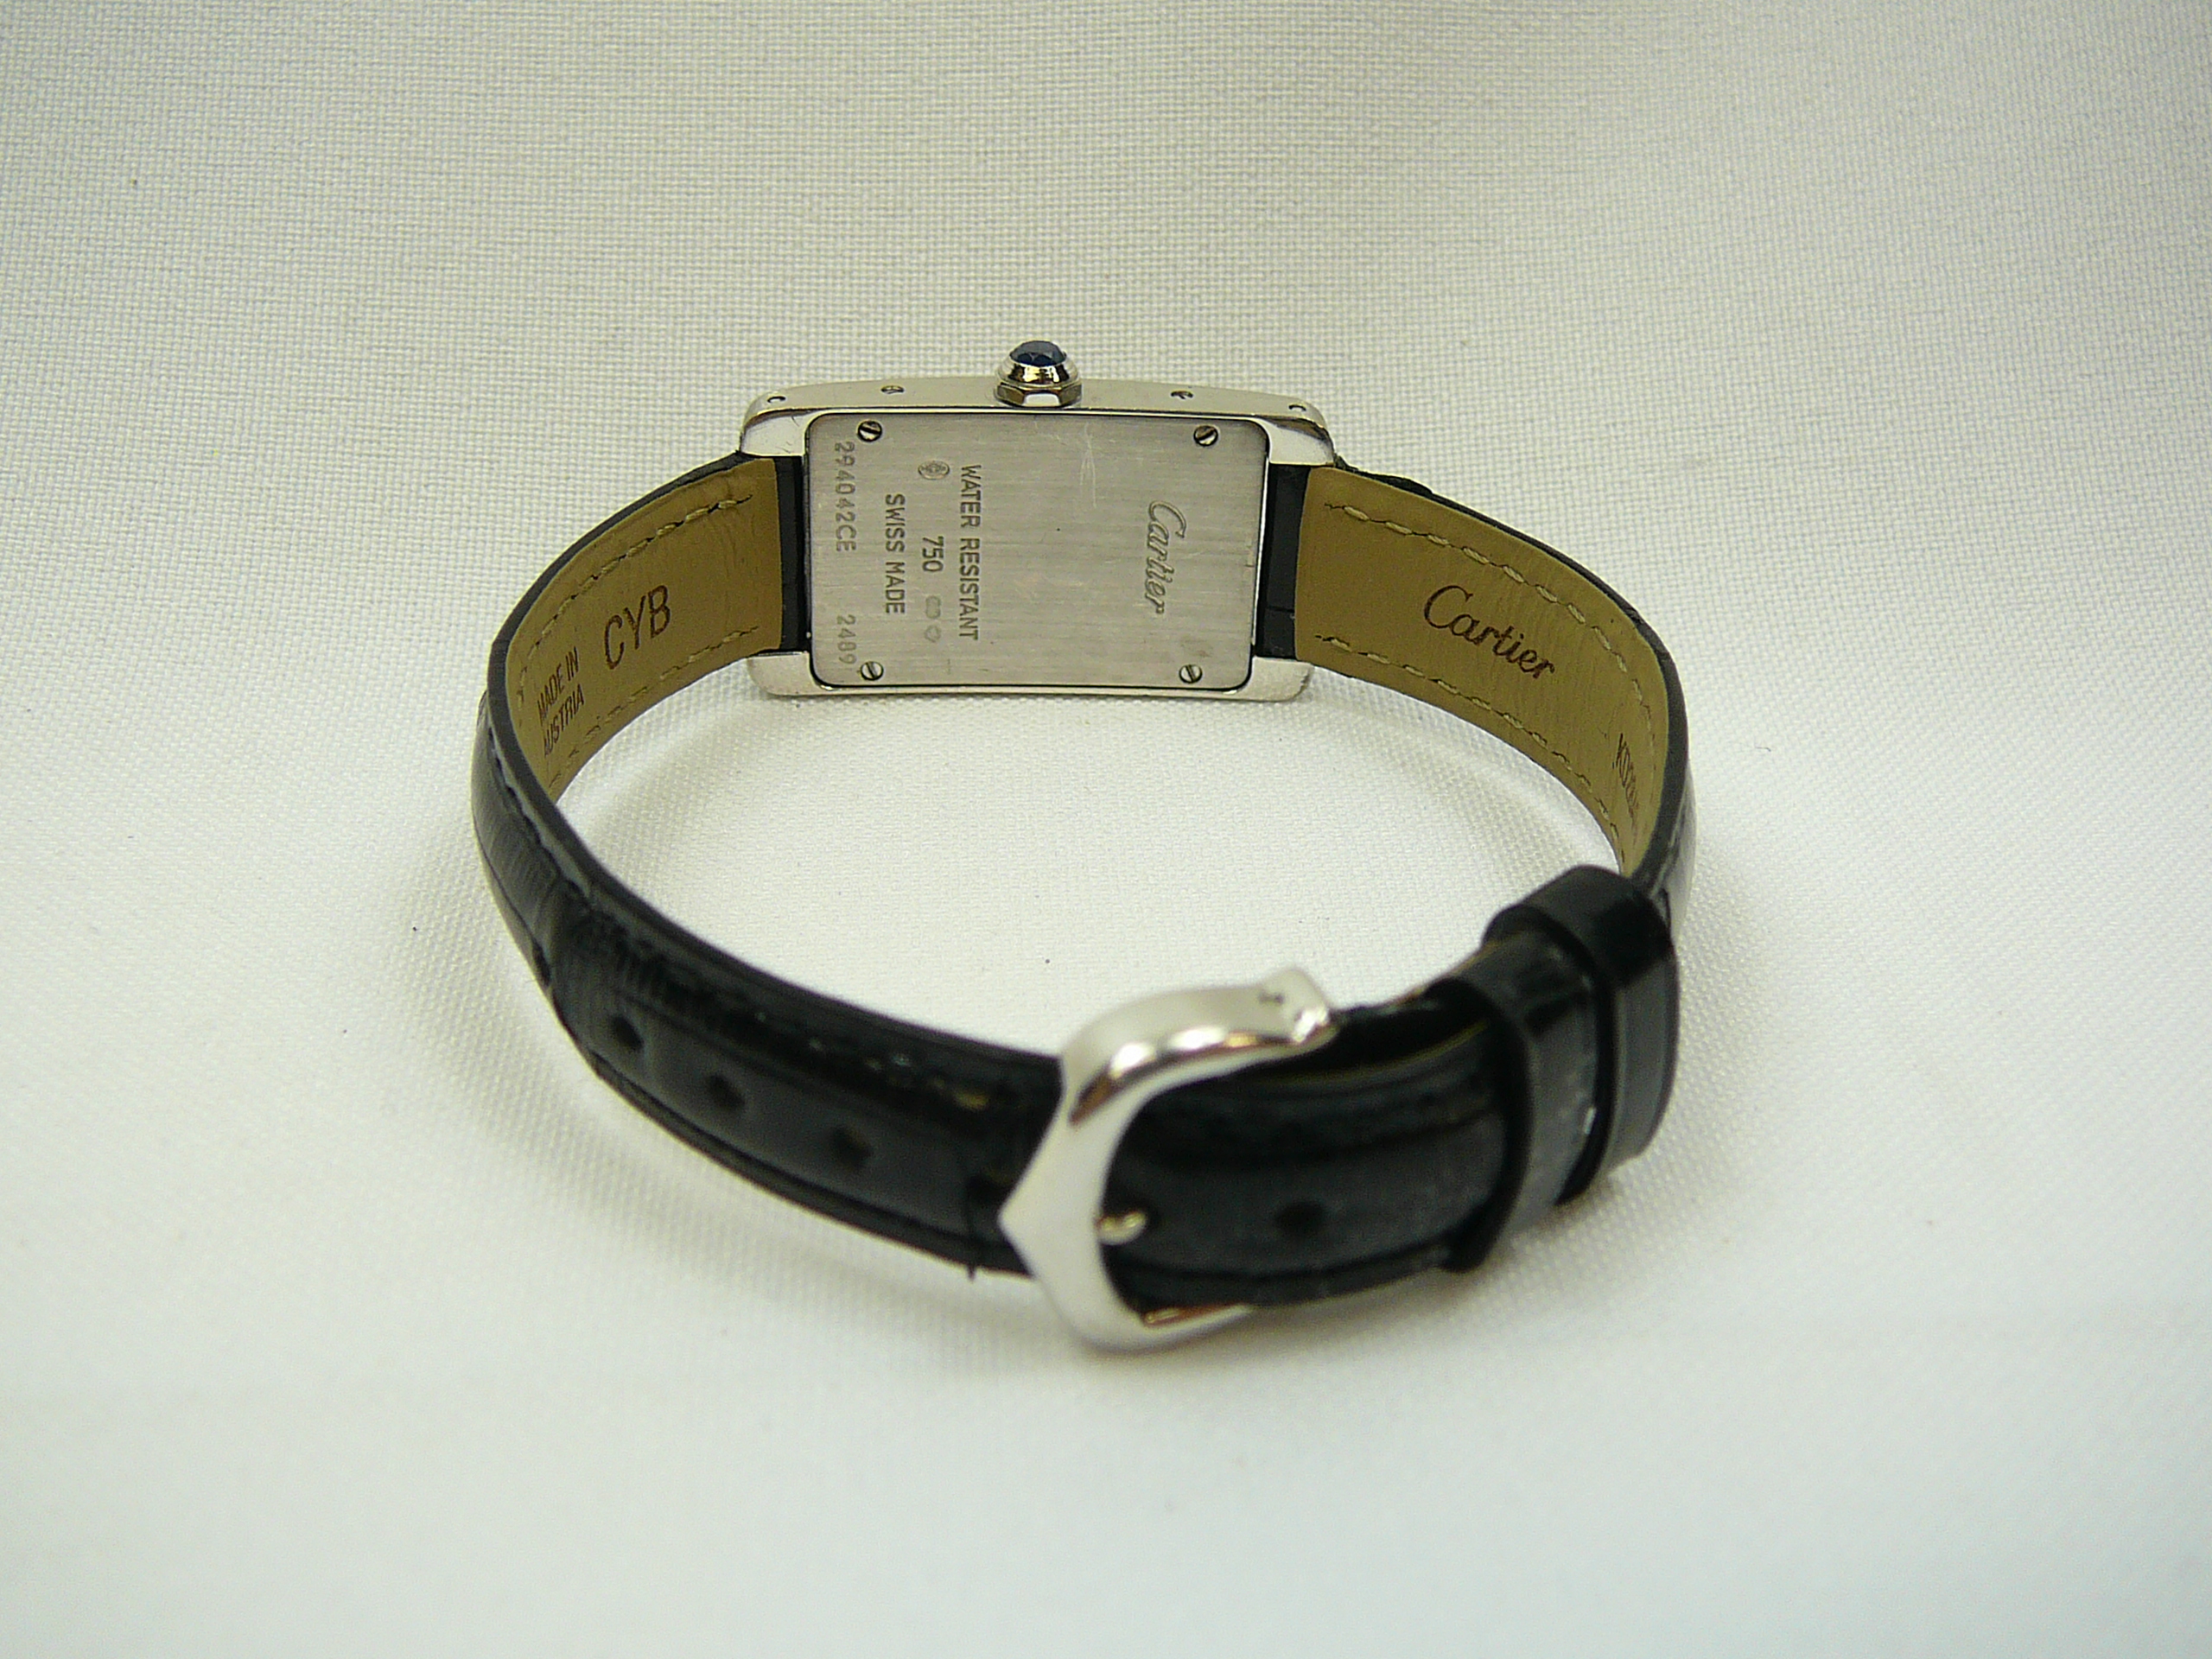 Ladies Gold Cartier Wrist Watch - Image 3 of 3